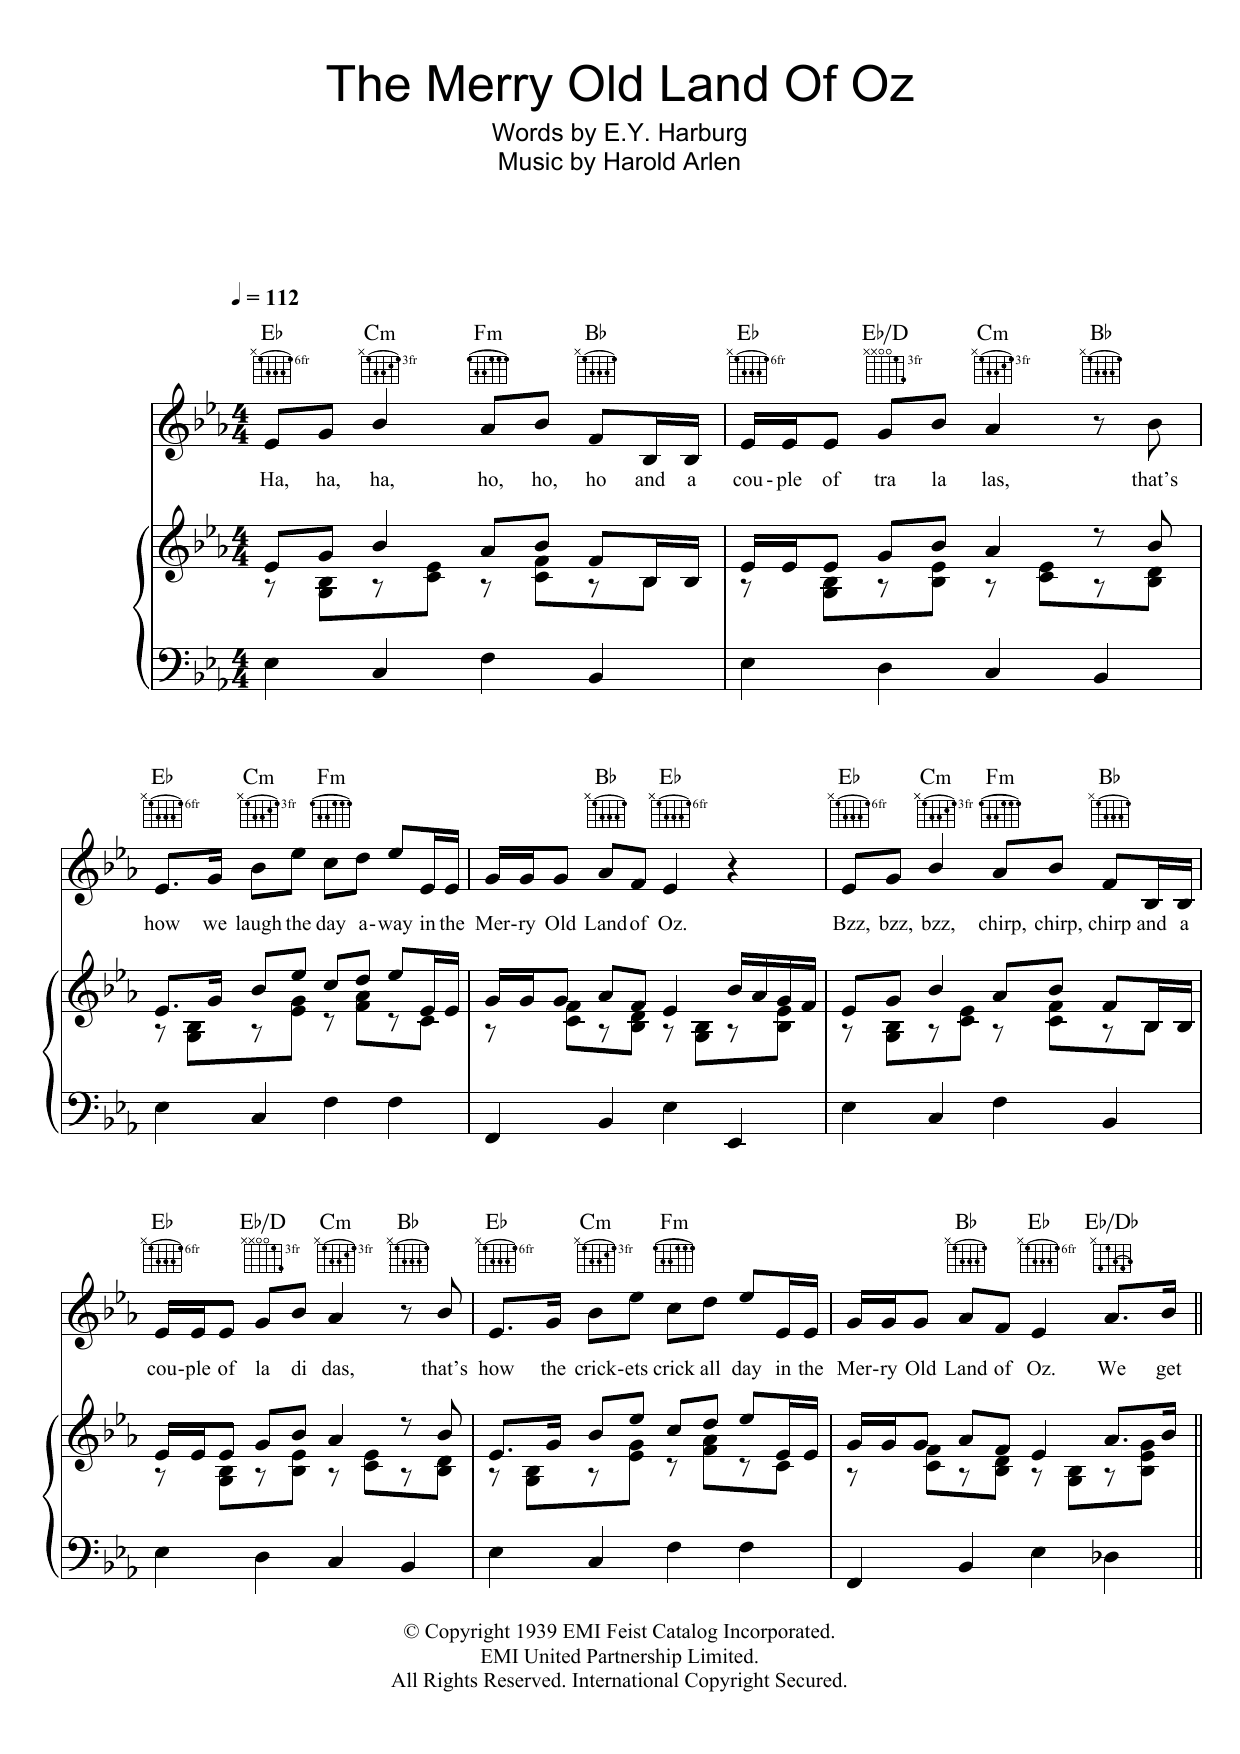 Harold Arlen The Merry Old Land Of Oz Sheet Music Notes & Chords for Ukulele - Download or Print PDF